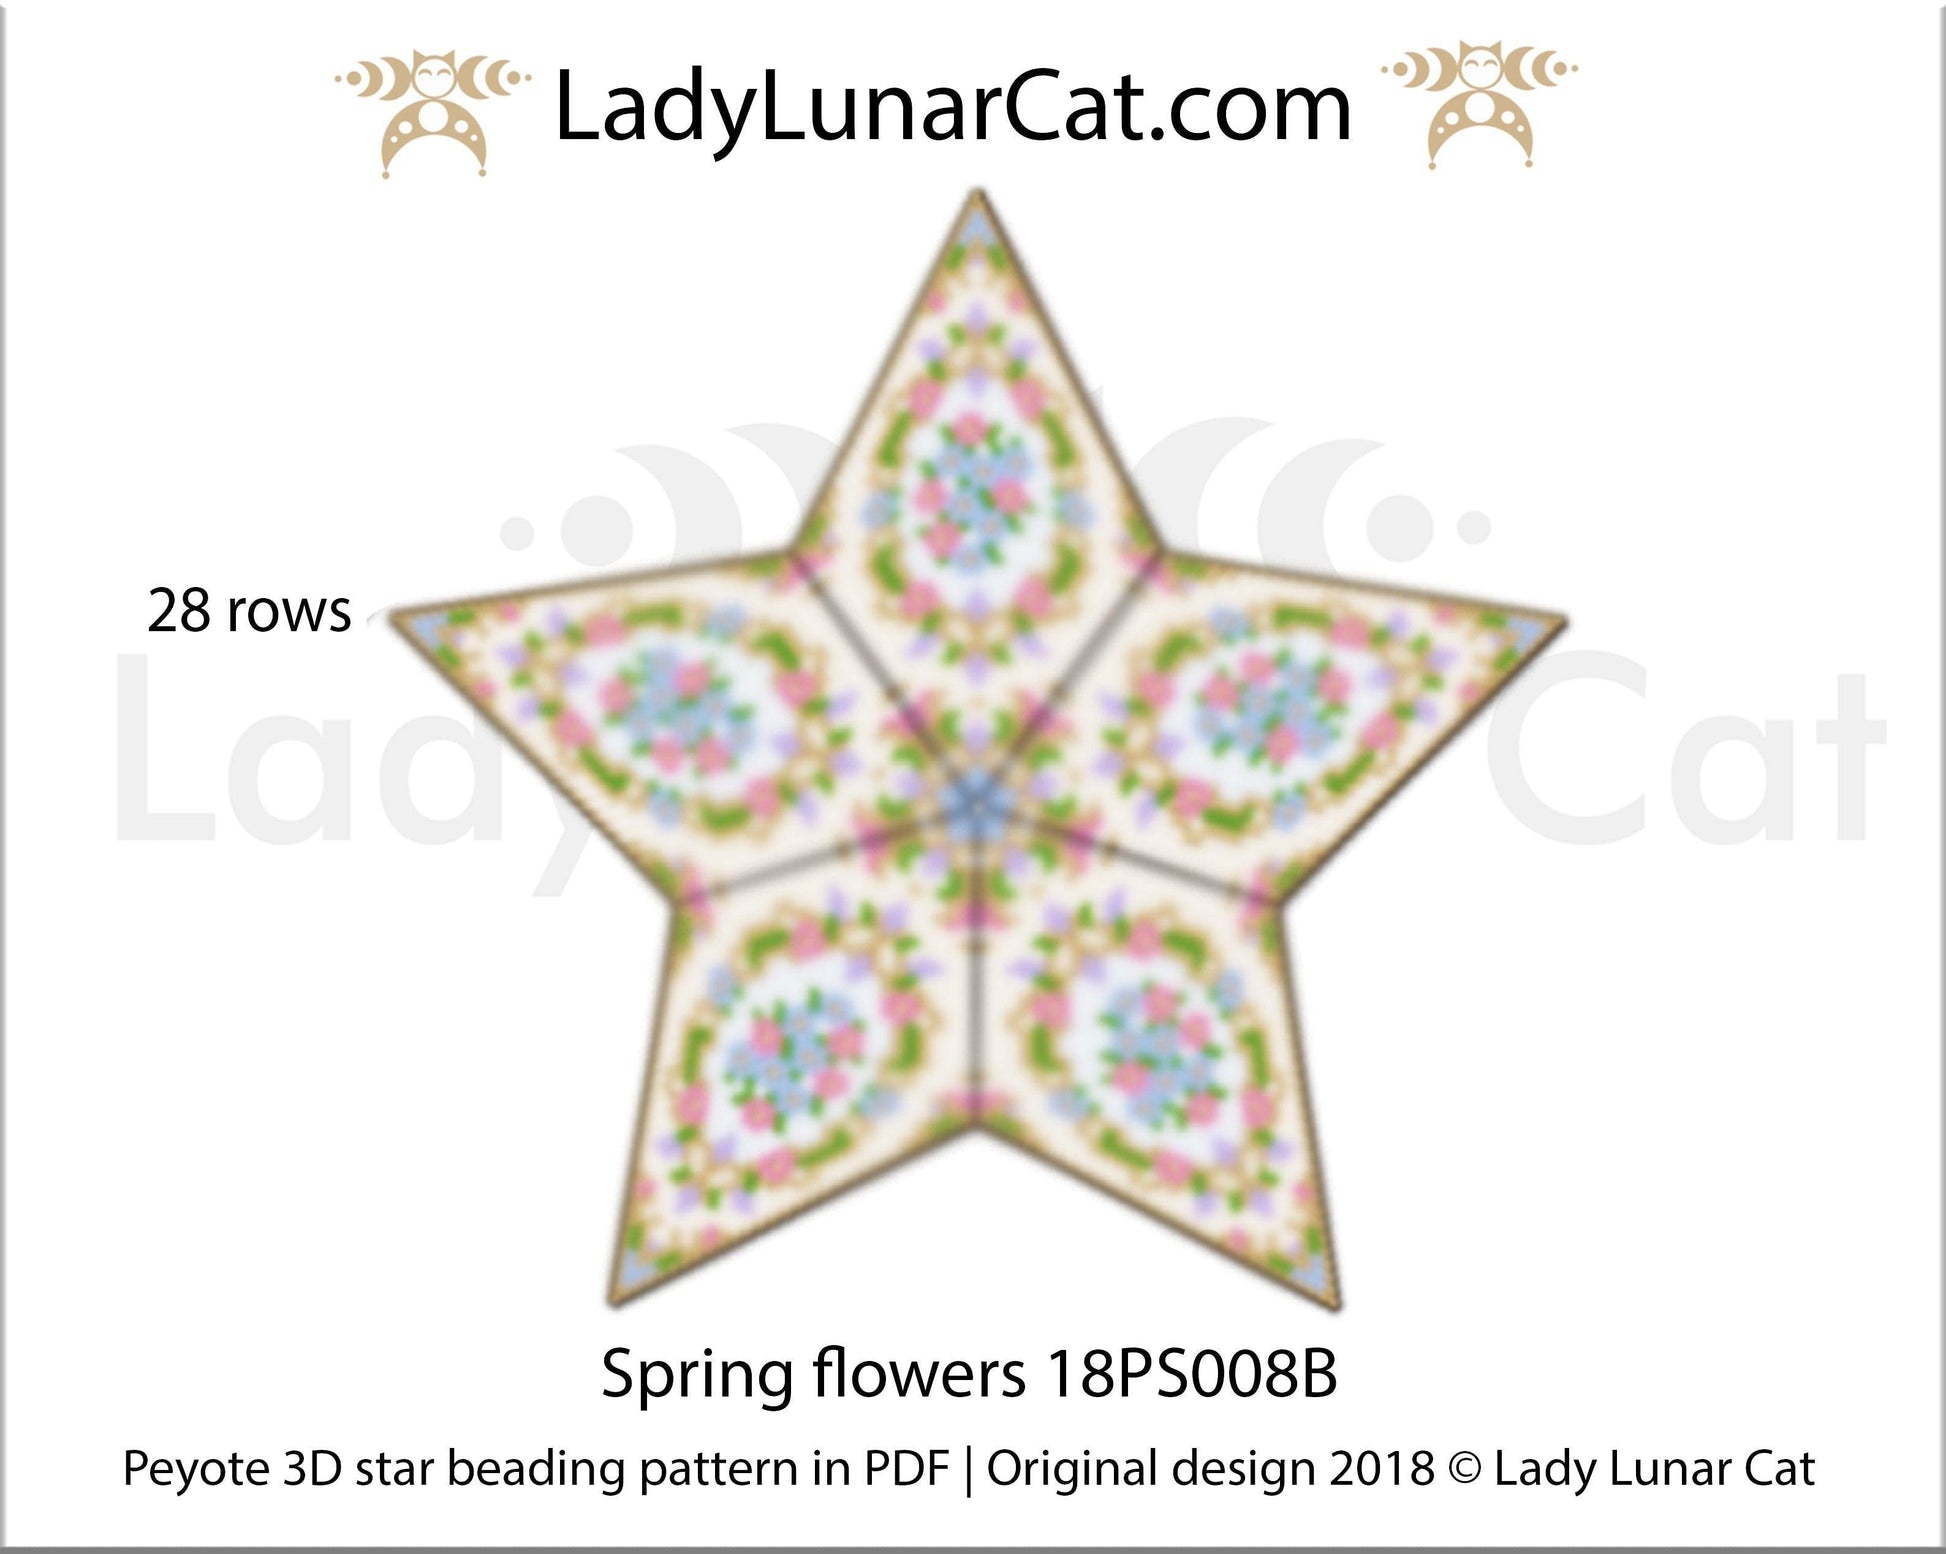 Peyote star patterns for beading Spring flowers 18PS008B LadyLunarCat